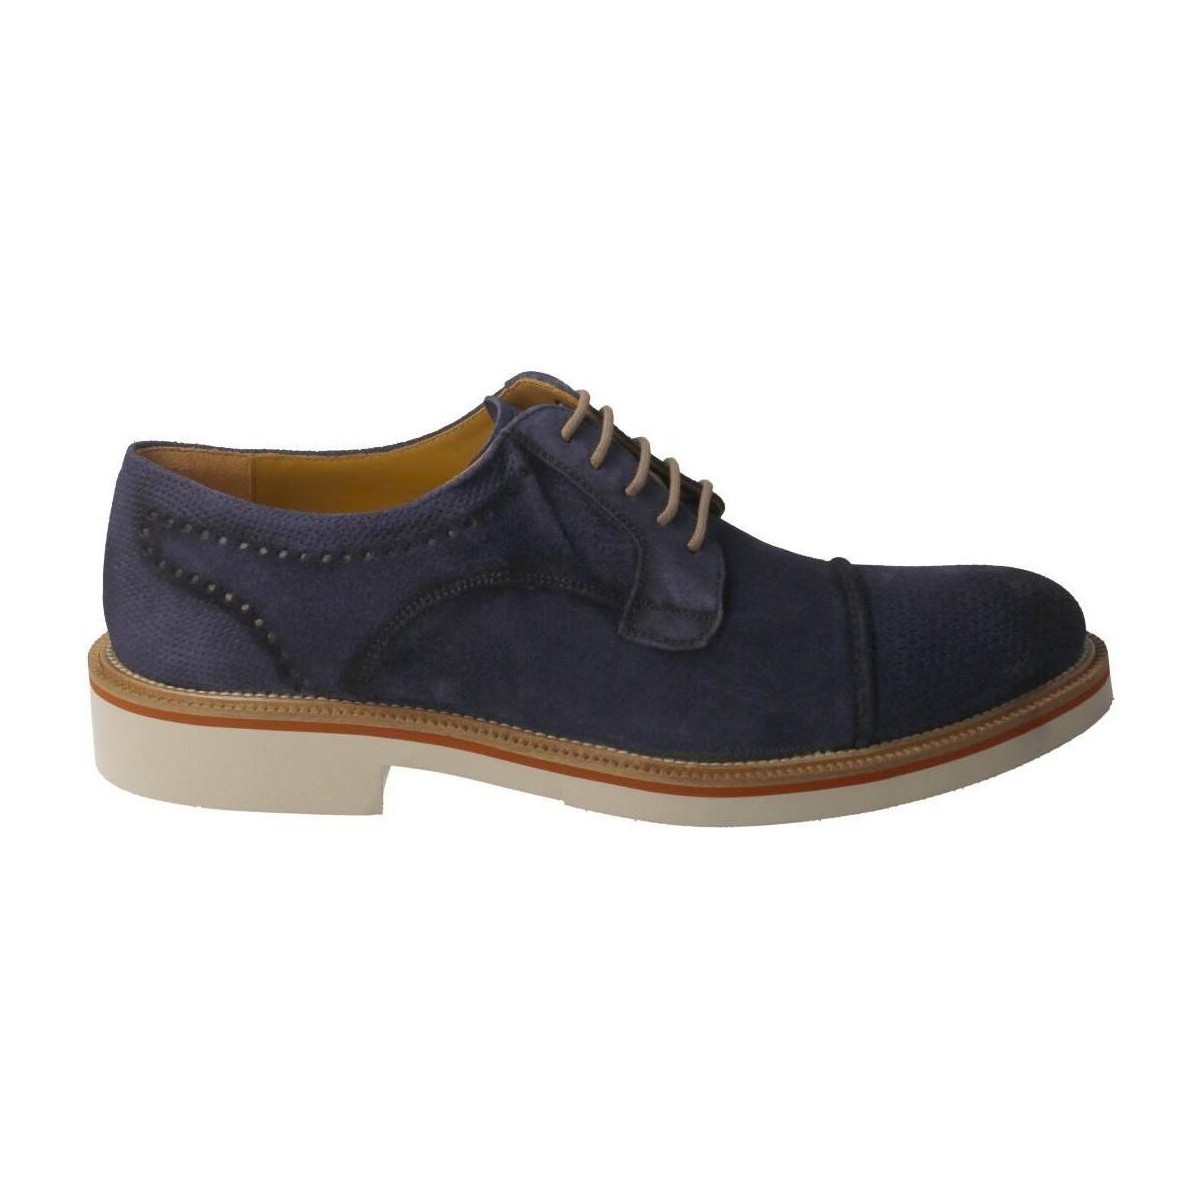 Sapatos Homem Sapatos & Richelieu Calce  Azul